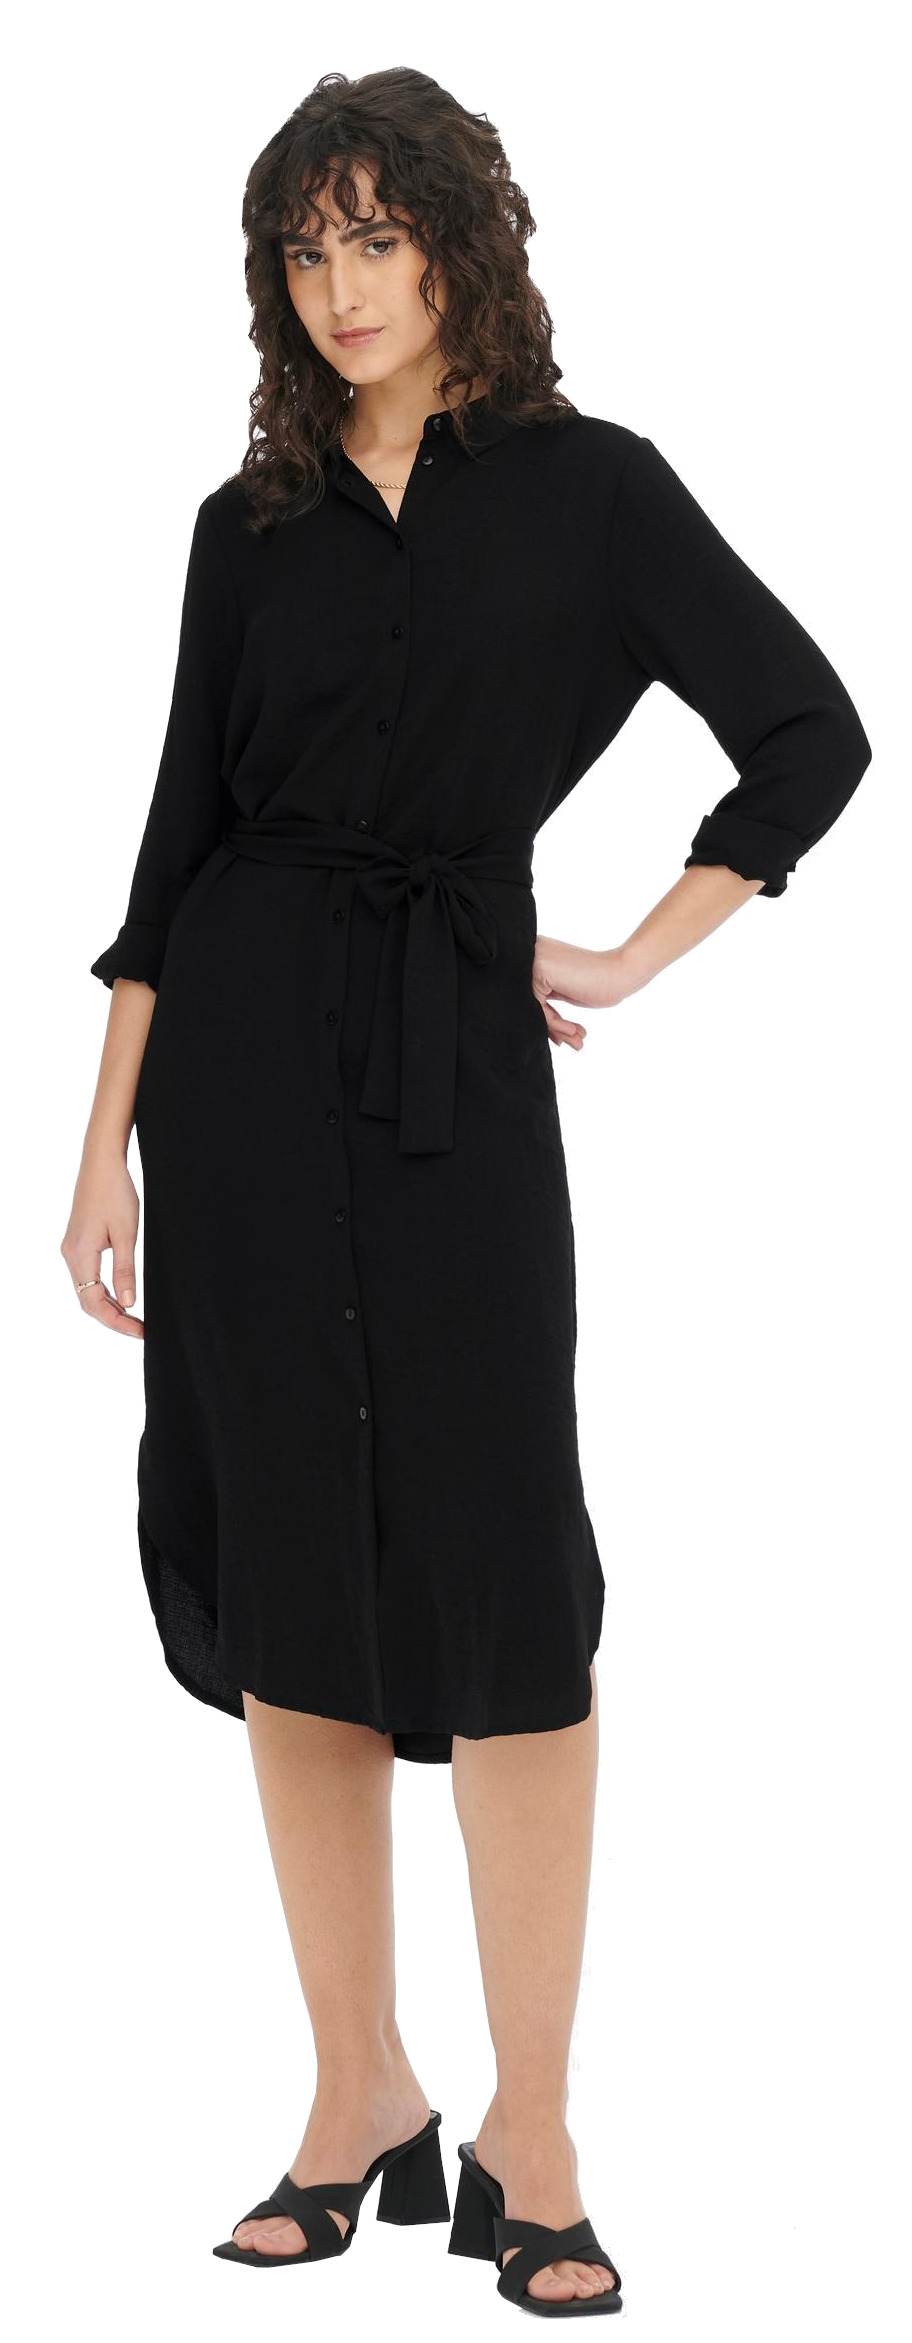 Jacqueline de Yong Dámske šaty JDYRACHEL Regular Fit 15267419 Black XS